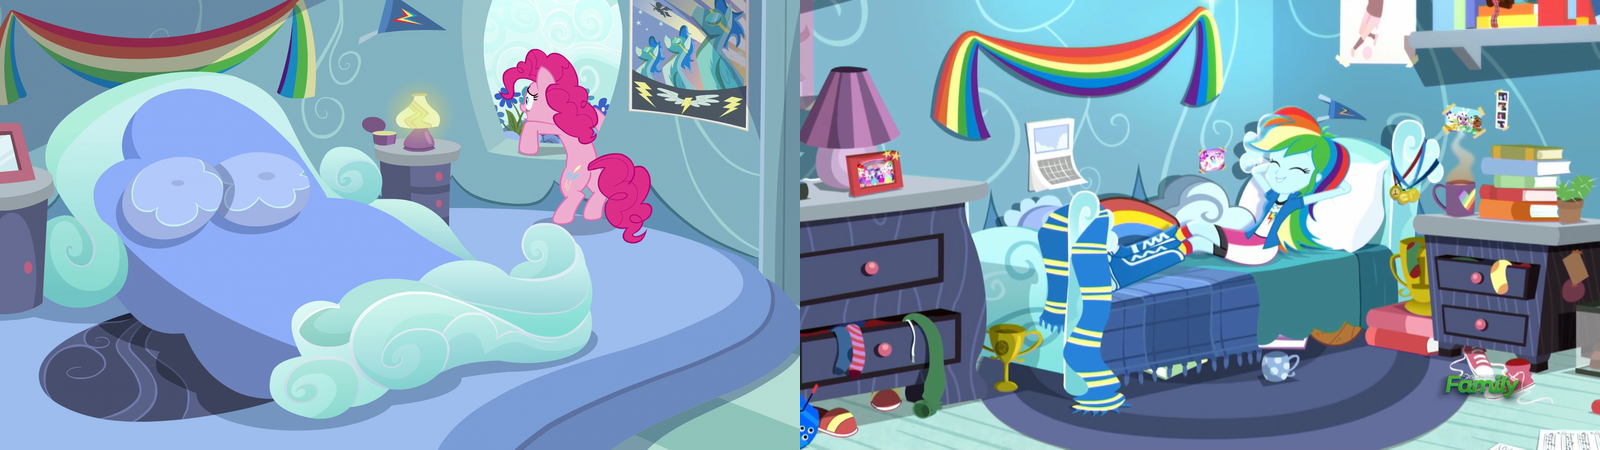 1561207  Safe Screencap Pinkie Pie Rainbow Dash Equestria Girls Secrets And Pies Bed Bedroom Comparison Converse Lamp Rainbow Dash's Bedroom Rainbow  